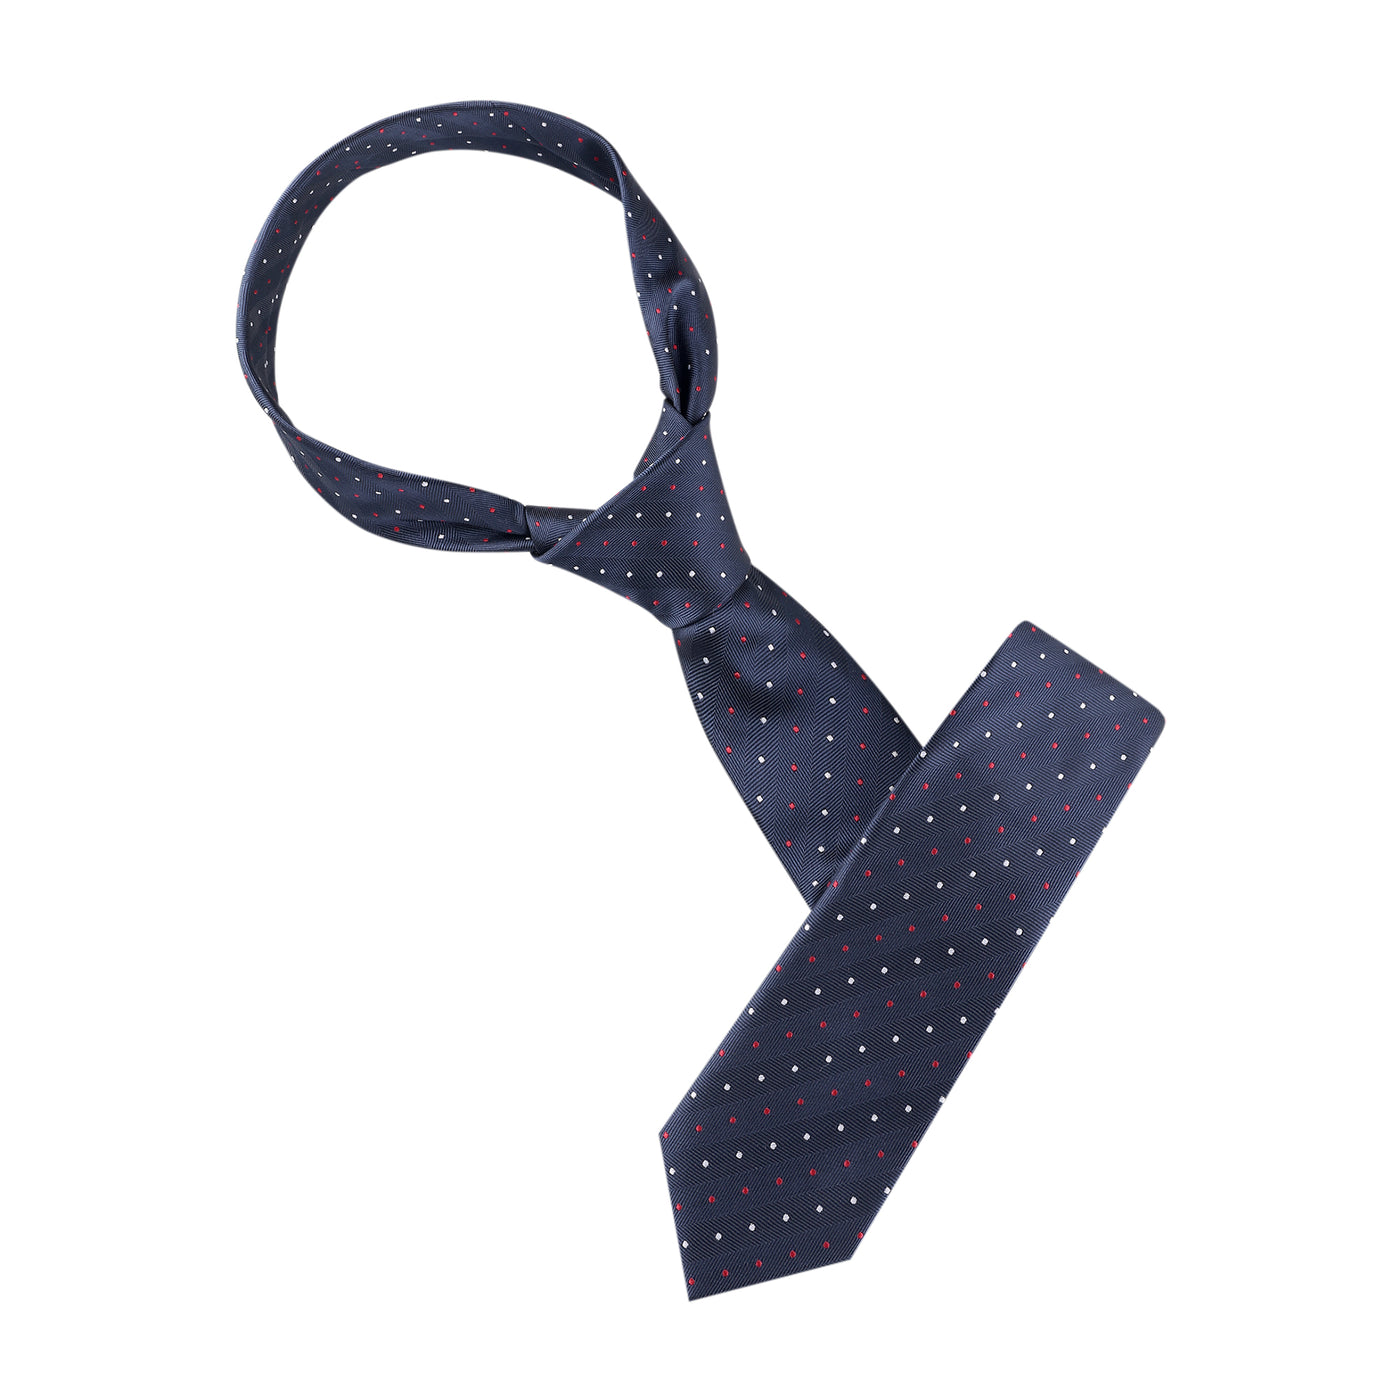 Allegra K Skinny Necktie Self-tied Polka Dots Formal Casual Slim Tie